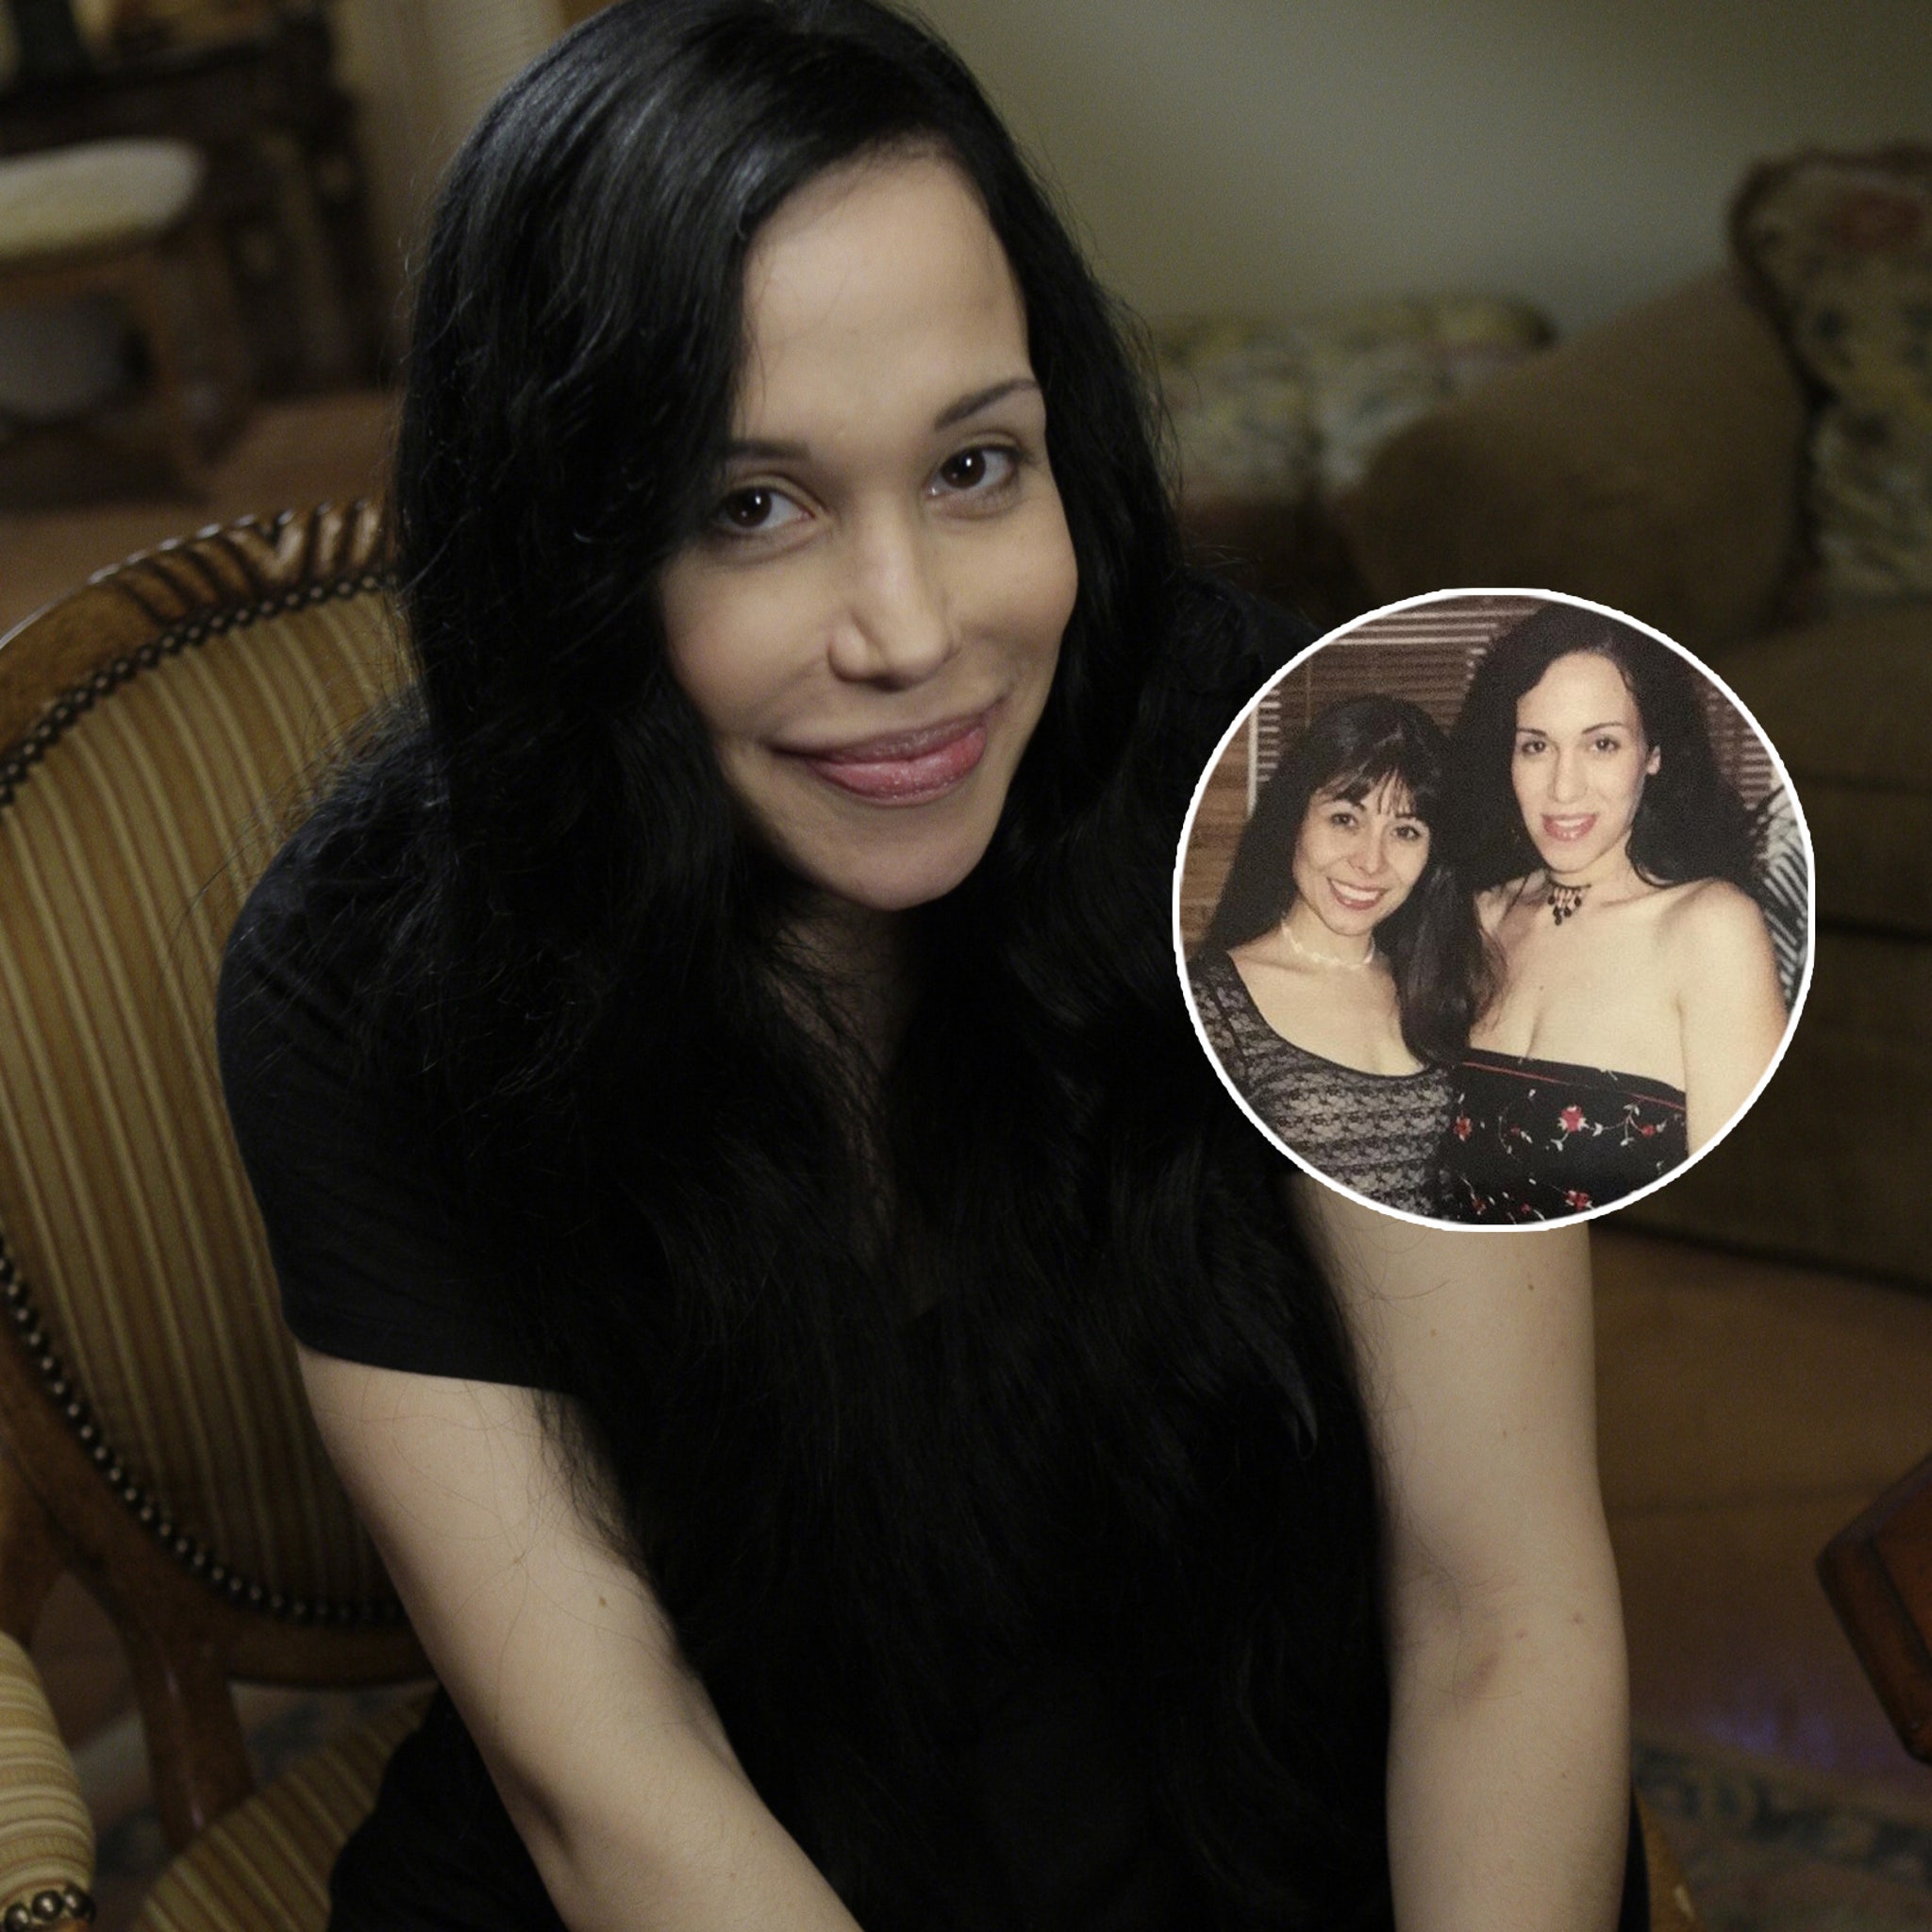 Octomom' Nadya Suleman Addresses Those Angelina Jolie Plastic Surgery Rumors